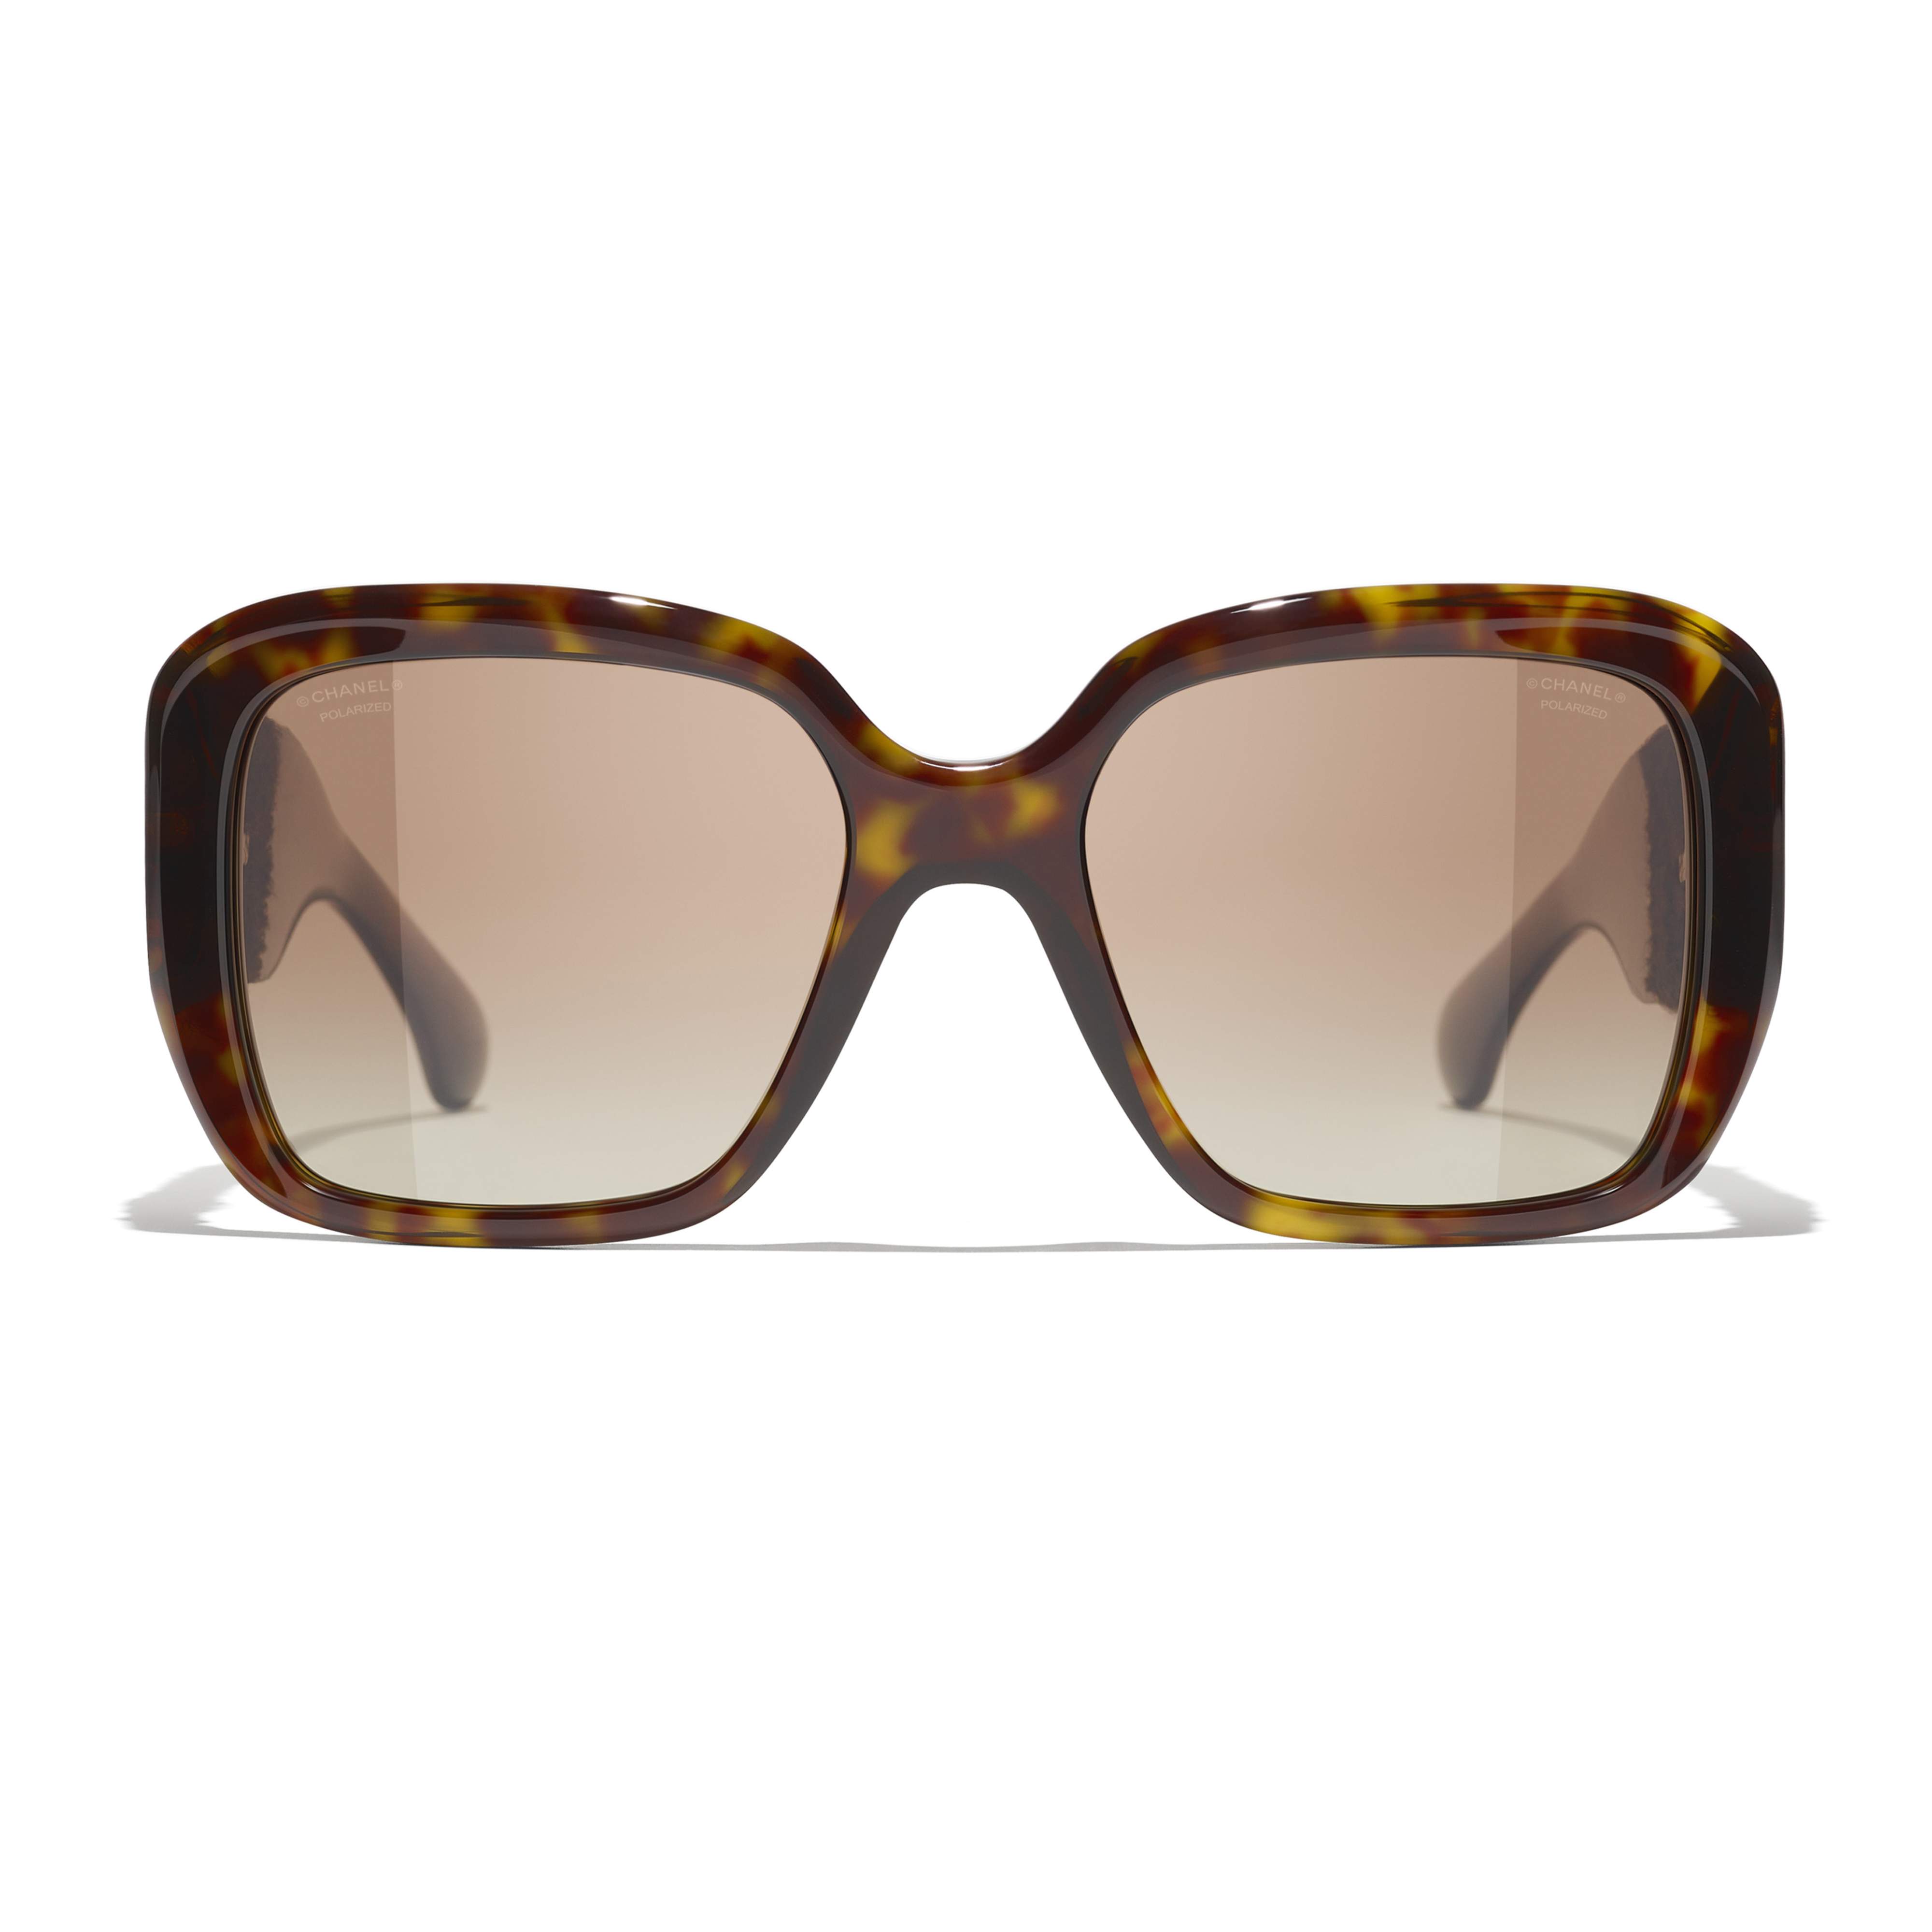 Sunglasses CHANEL CH5512 C714/S9 55-19 Dark havana in stock 